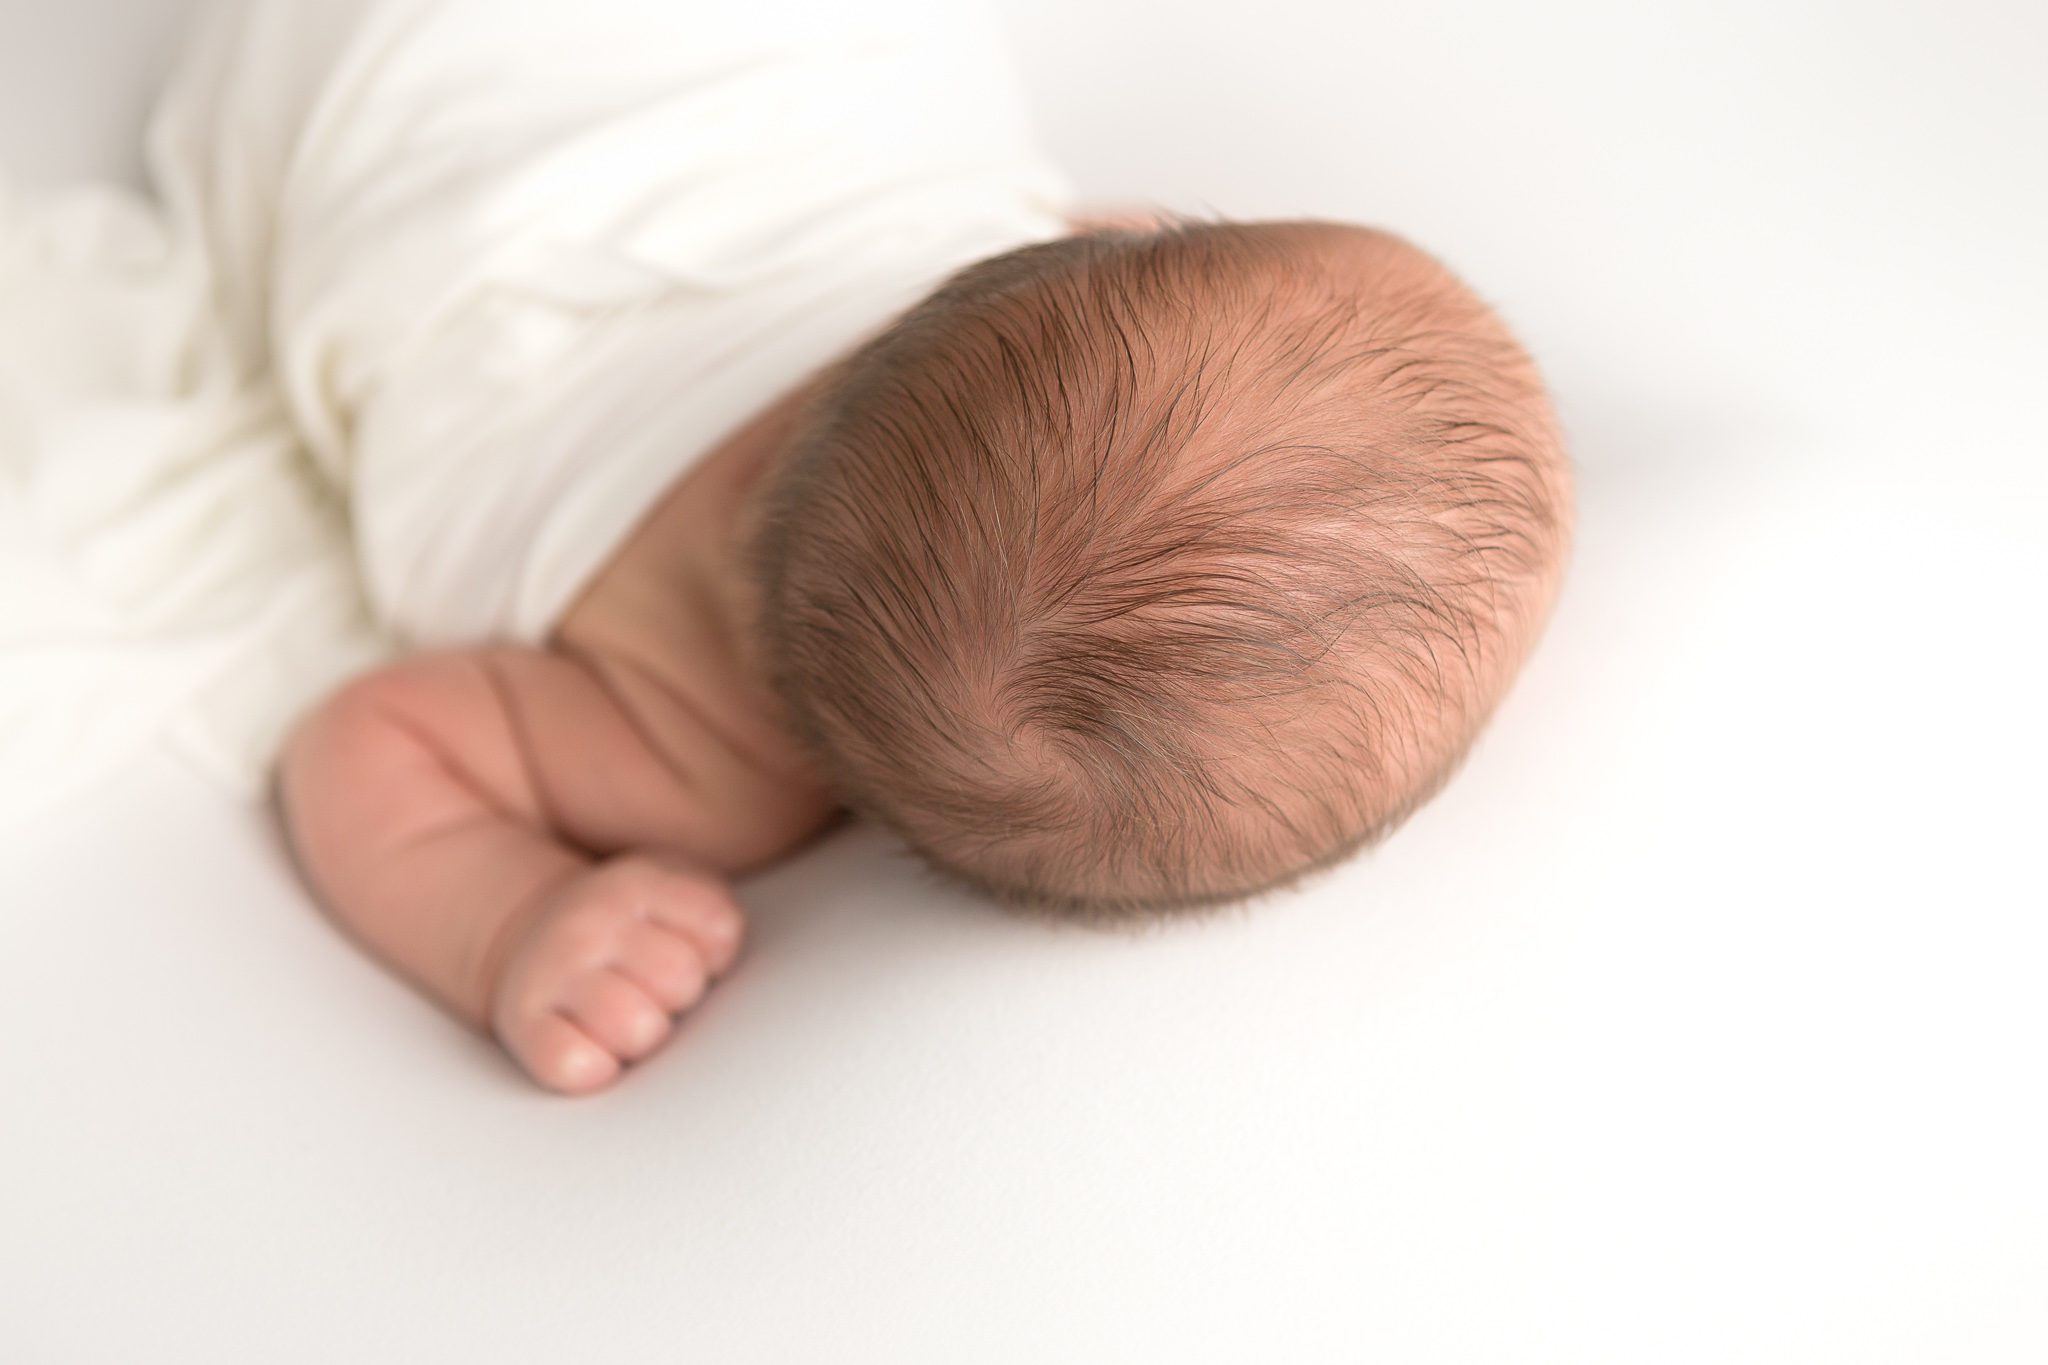 Newborn boy, photo of hair and hand, white background